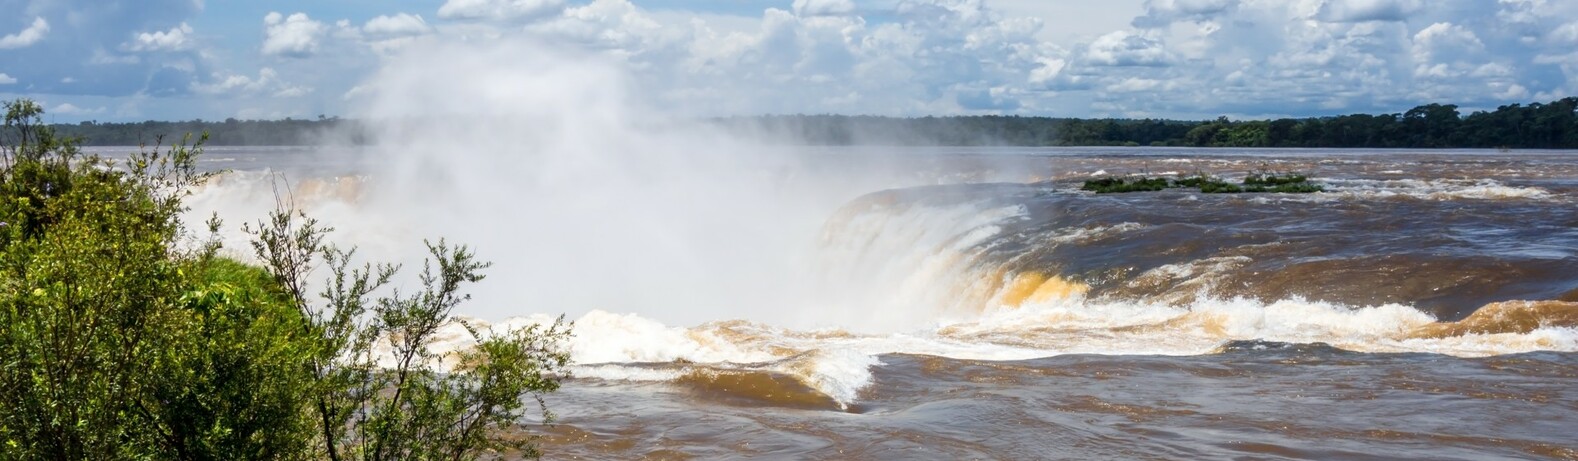 Slapovi Iguazu